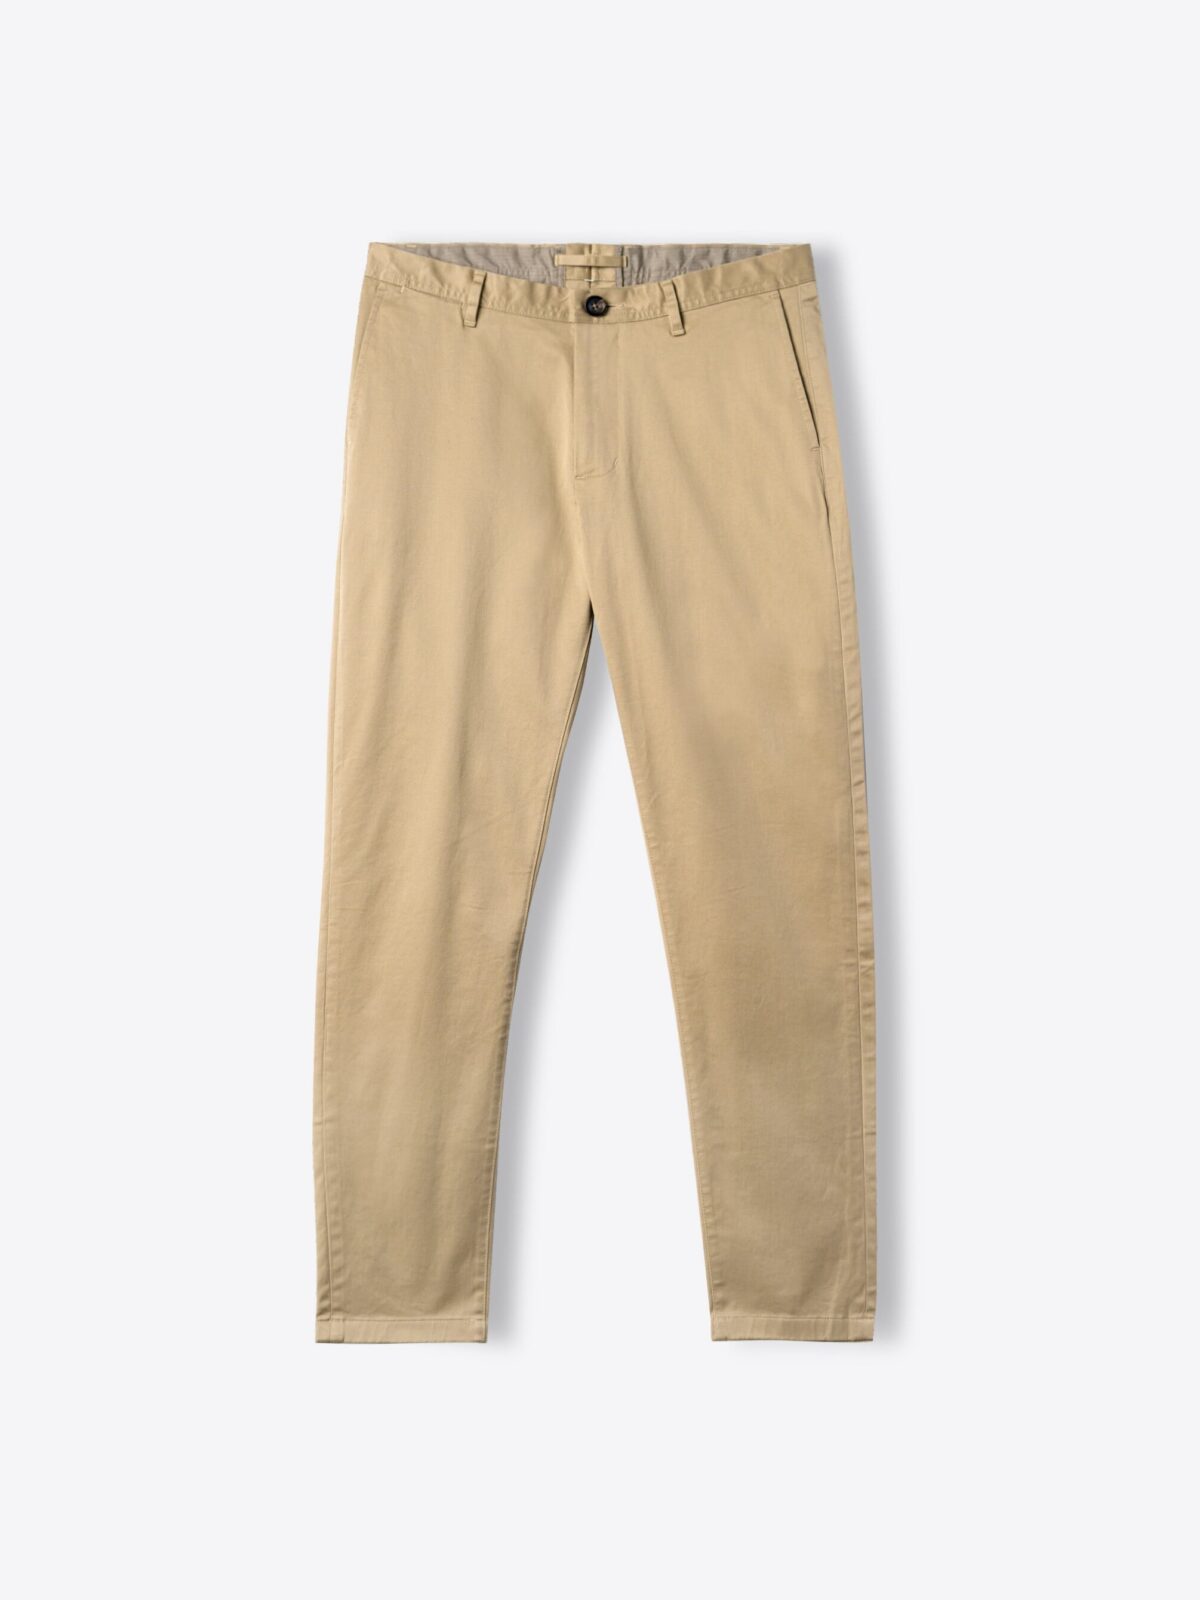 Vestry Khaki Lightweight Stretch Cotton Chino - Custom Fit Pants